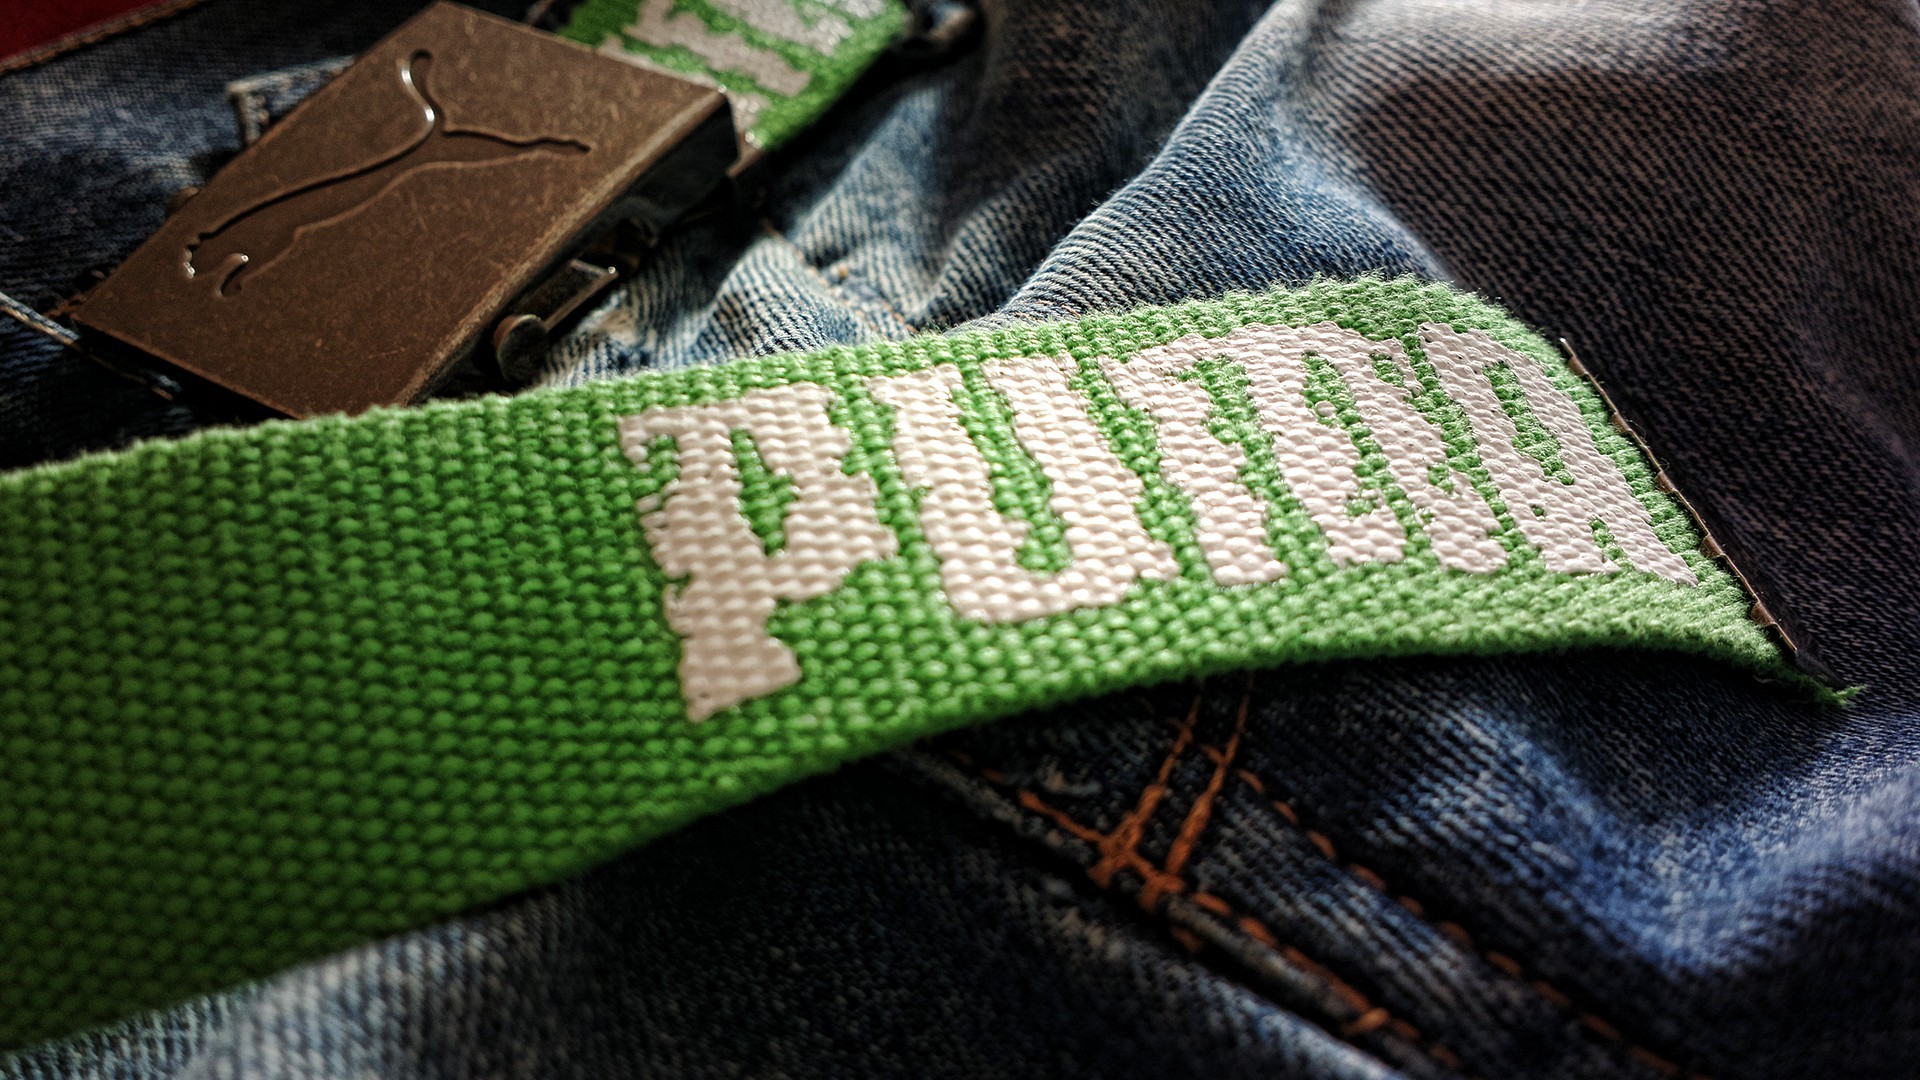 Puma Jeans Belt Closeup 1920x1080